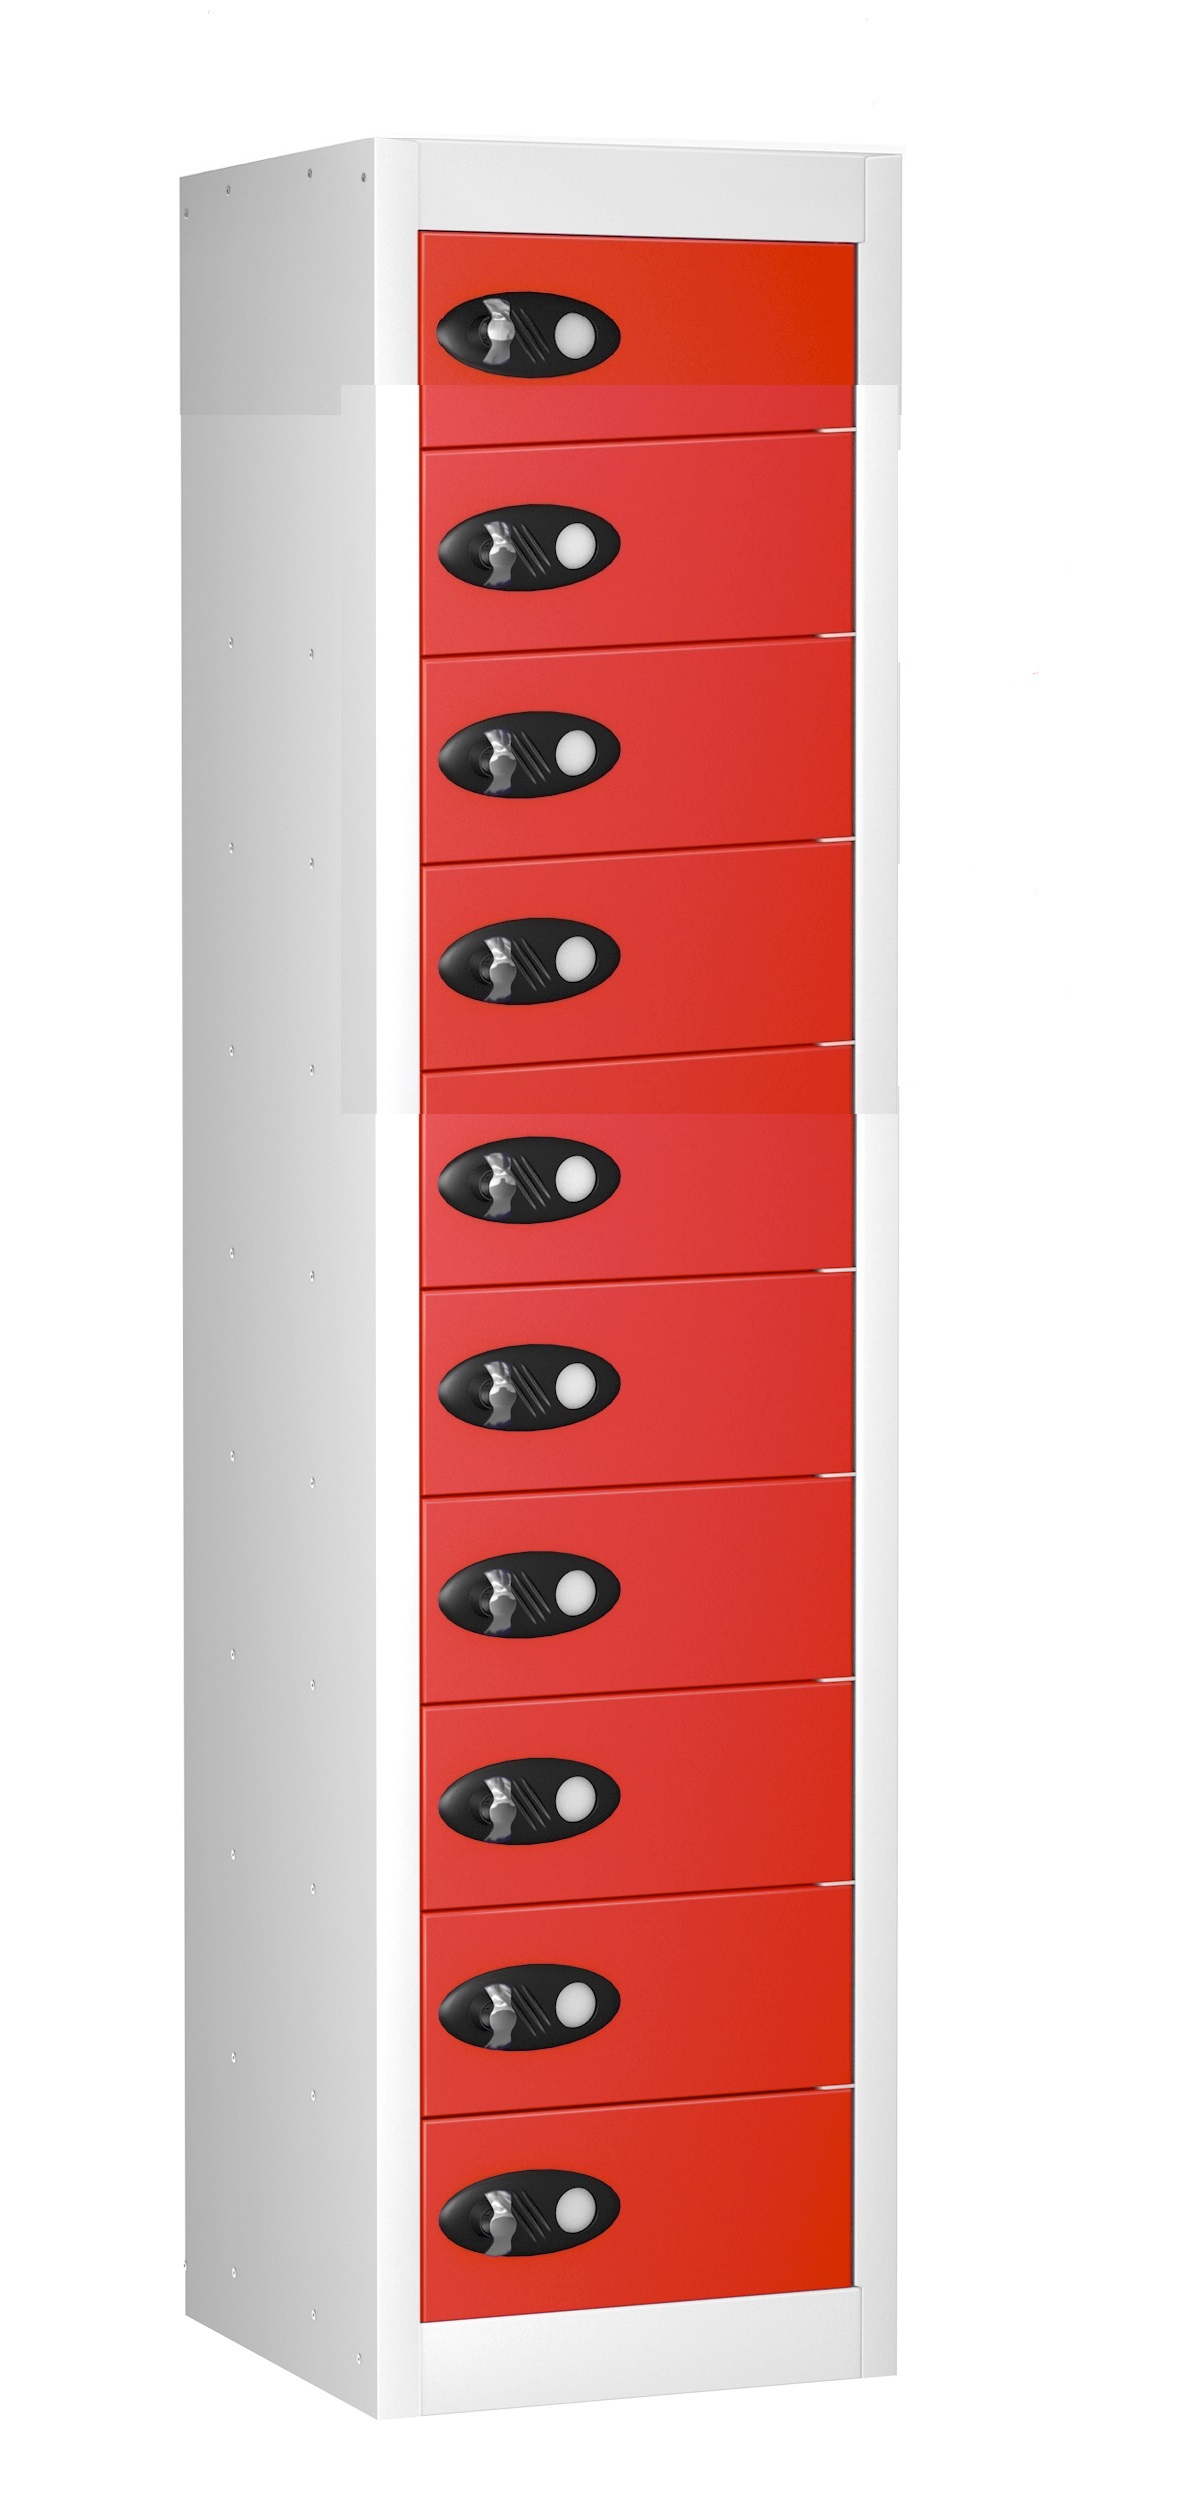 MOBILE PHONE Storage Locker -10 Doors (Non Charging)